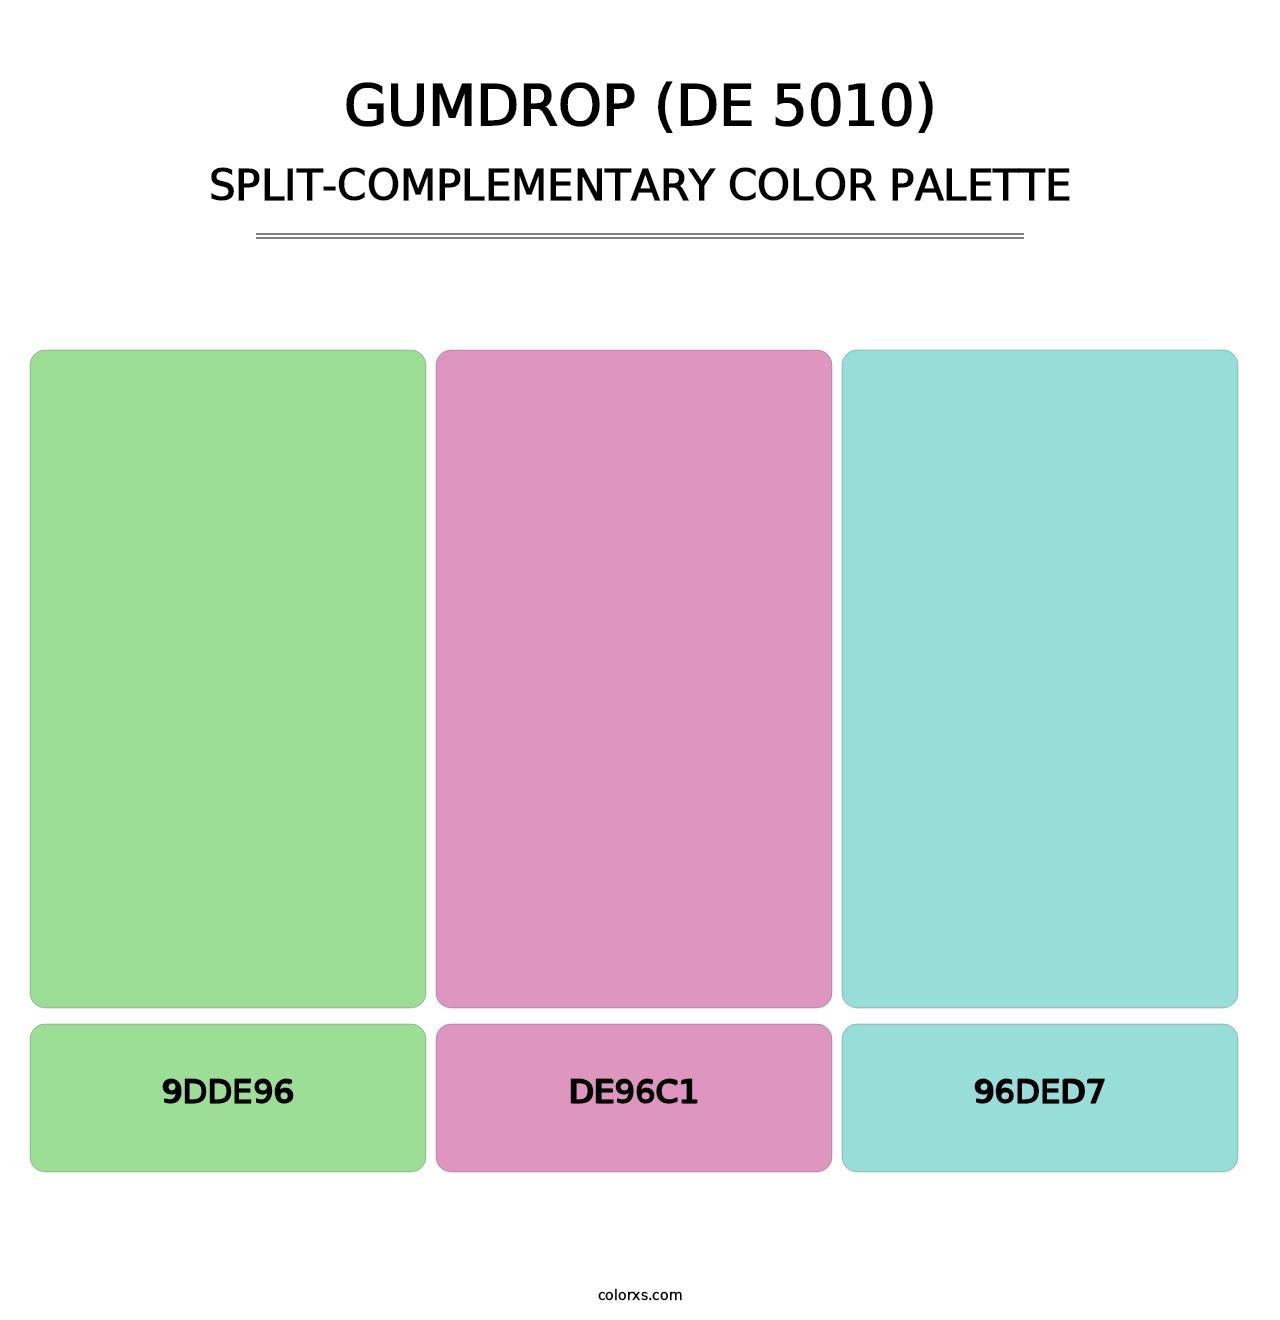 Gumdrop (DE 5010) - Split-Complementary Color Palette